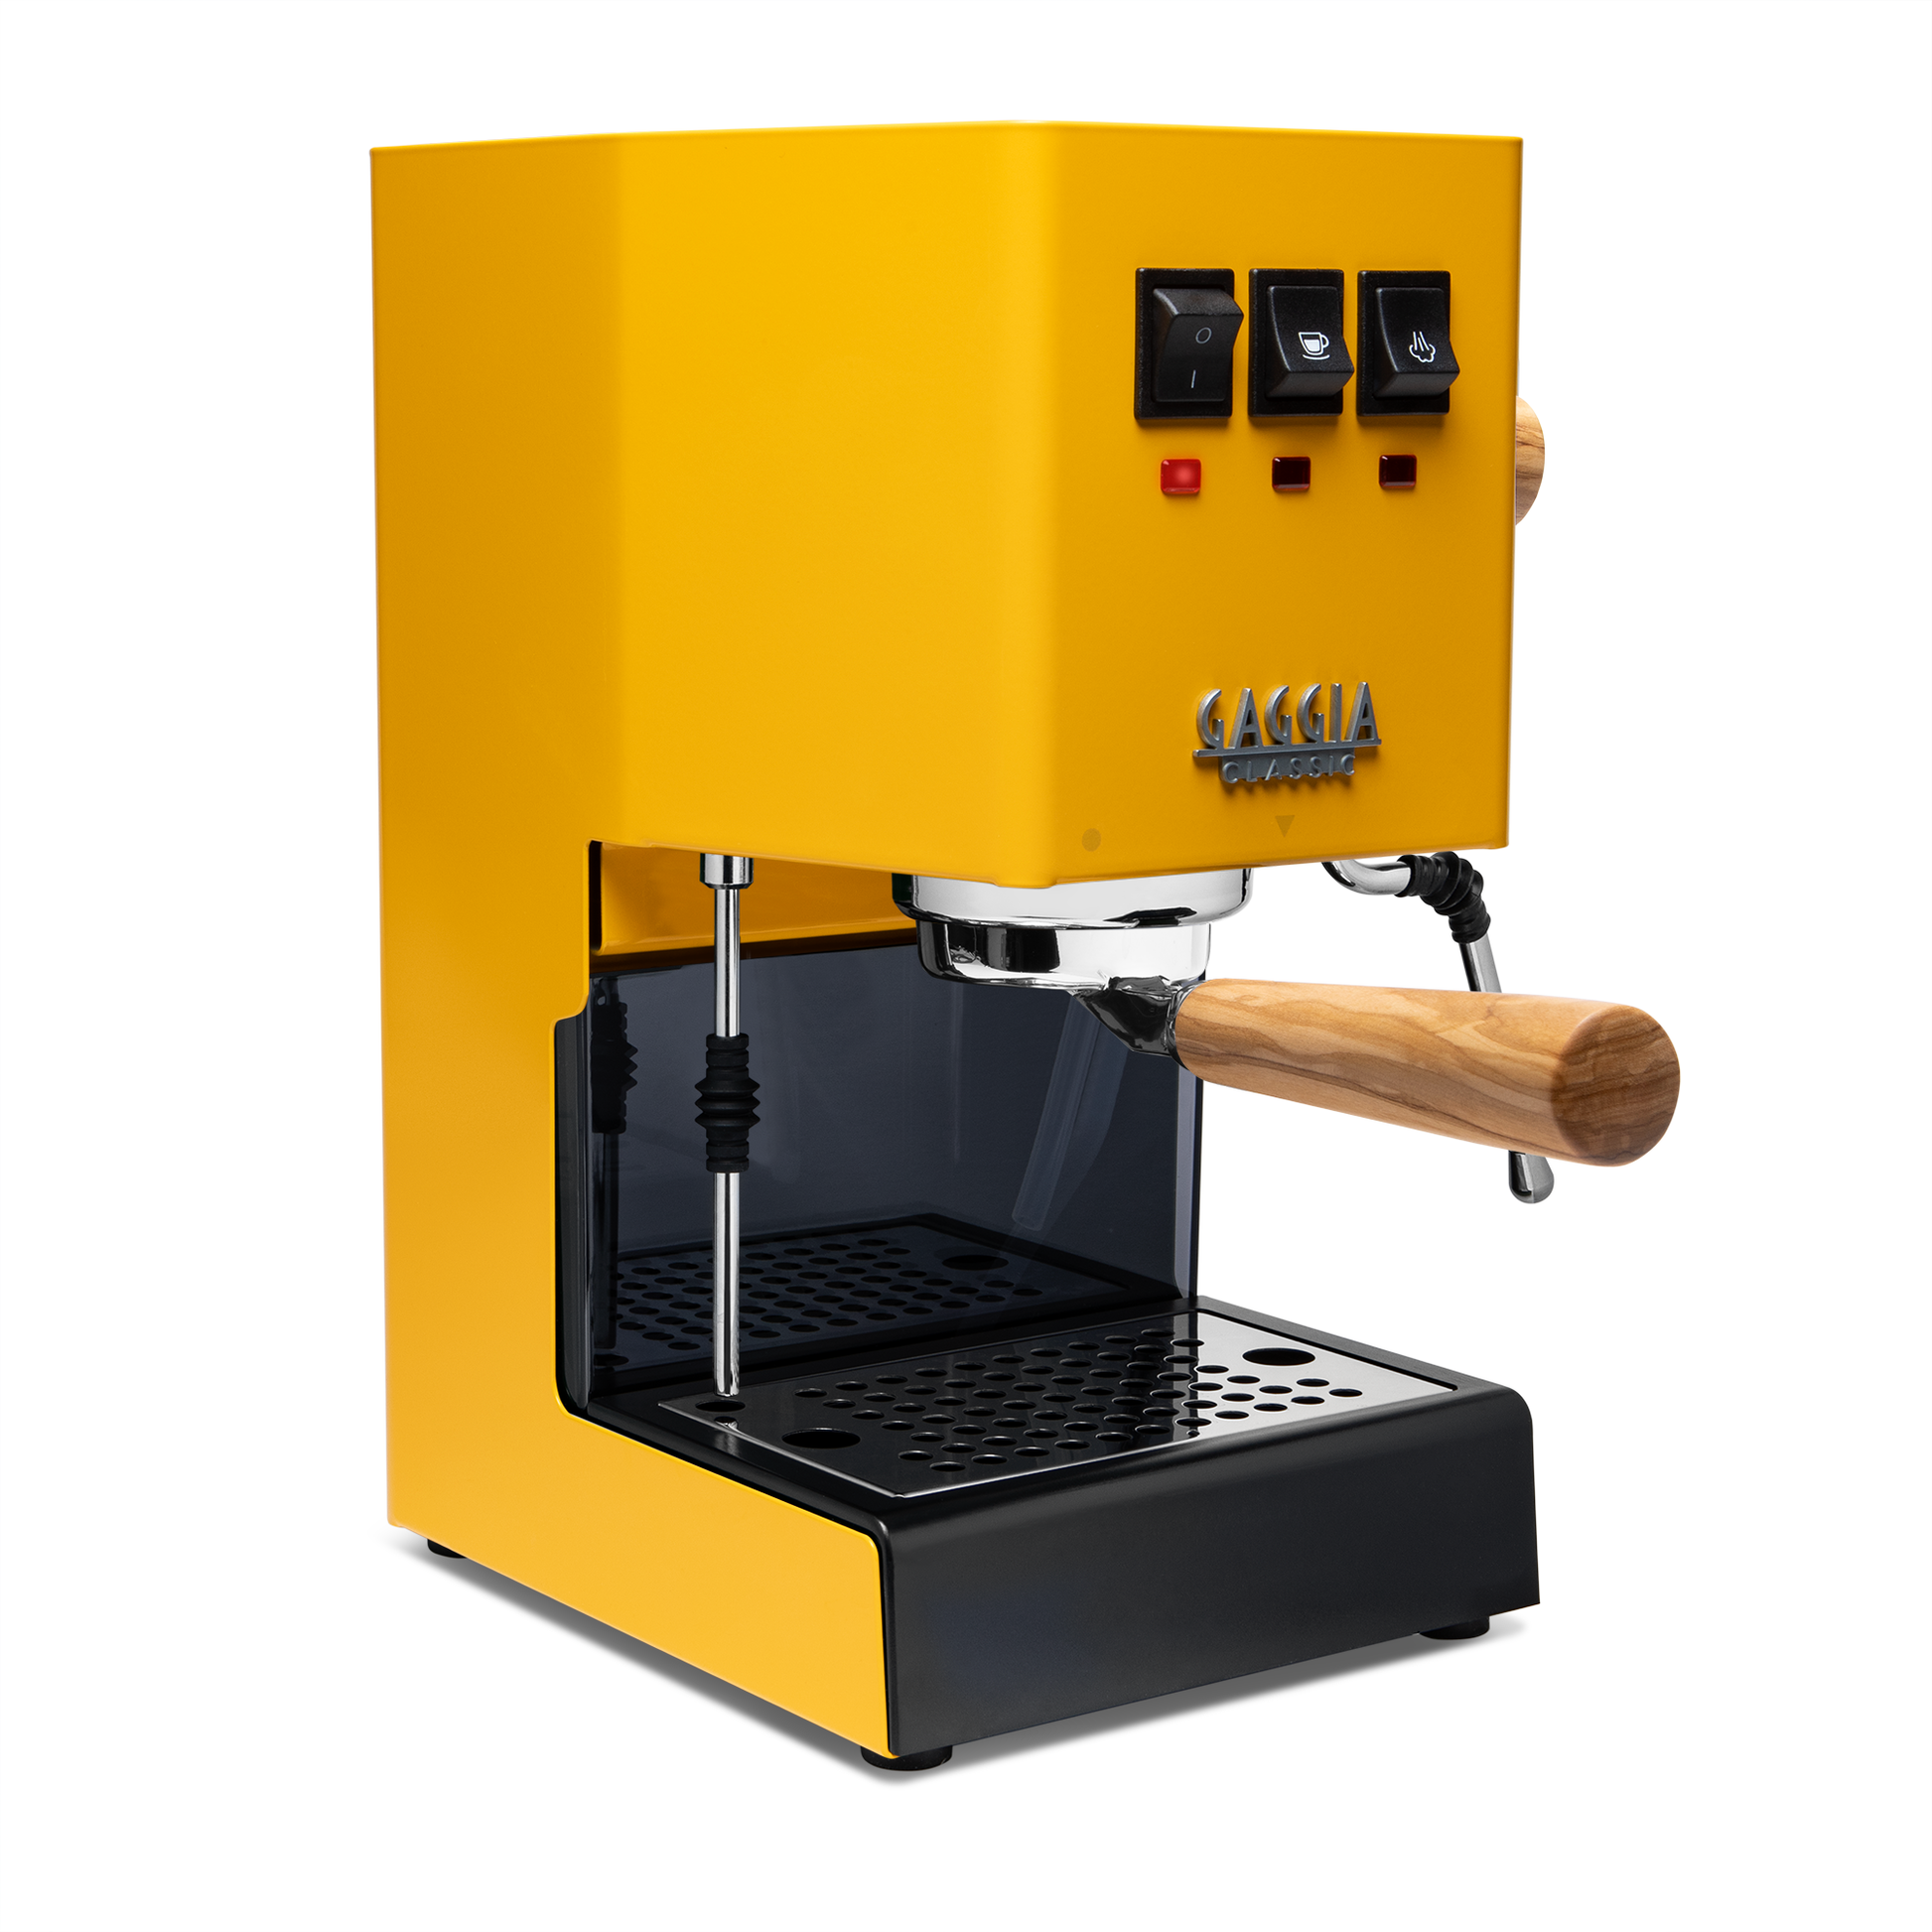 Introducing the Smeg Espresso Coffee Machine with Grinder